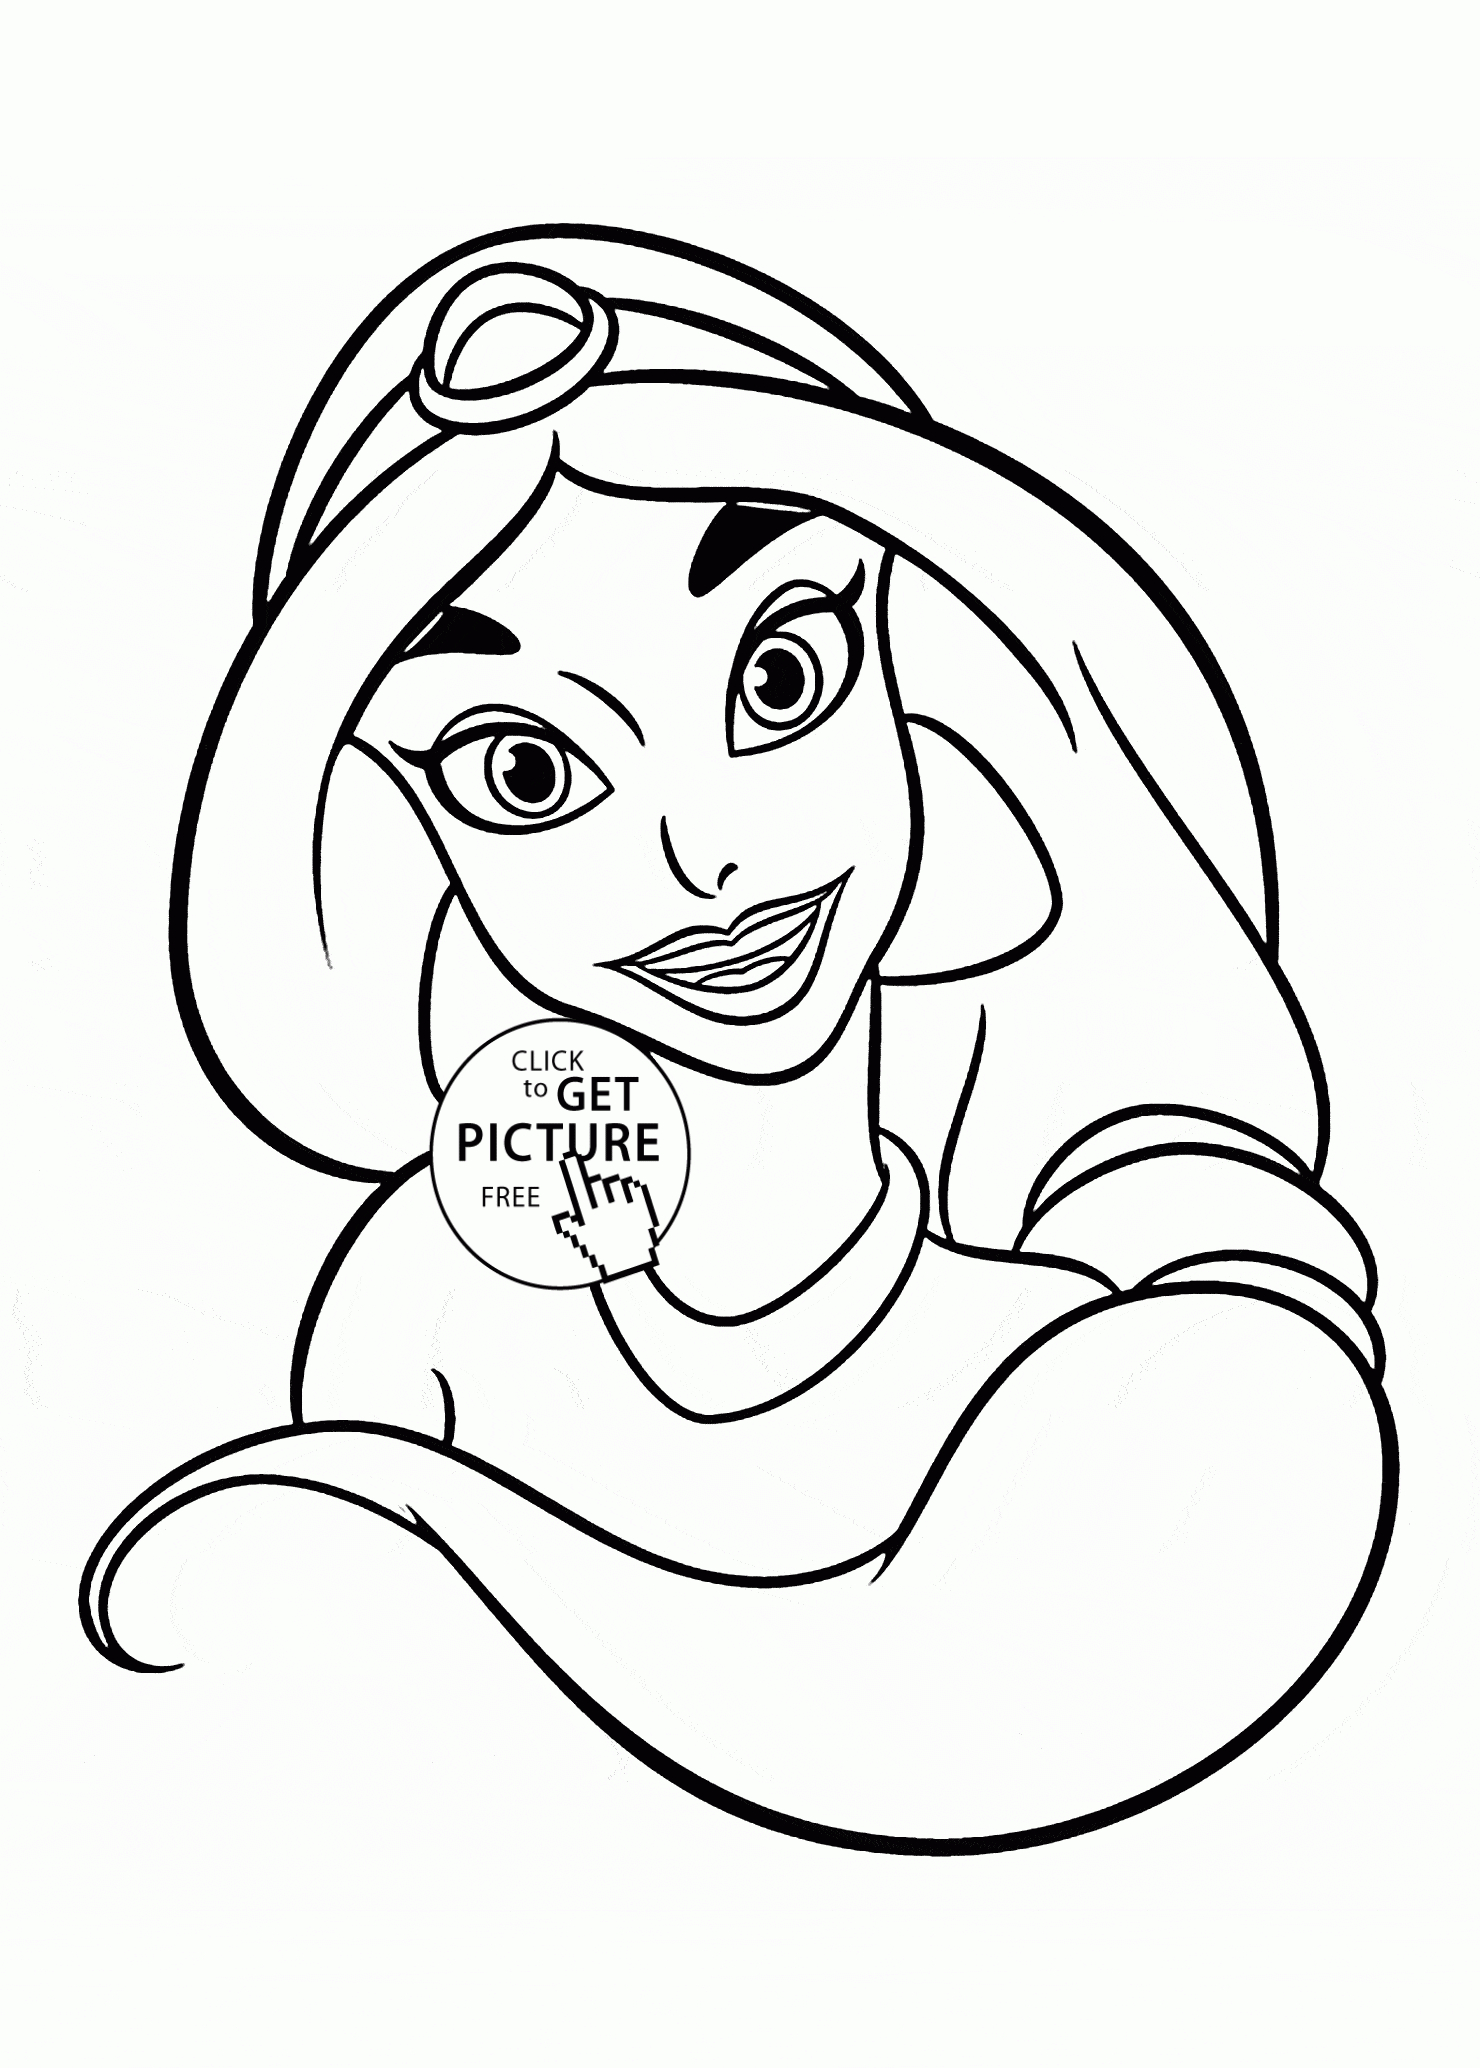 Free Printable Princess Jasmine Coloring Pages | Free ...